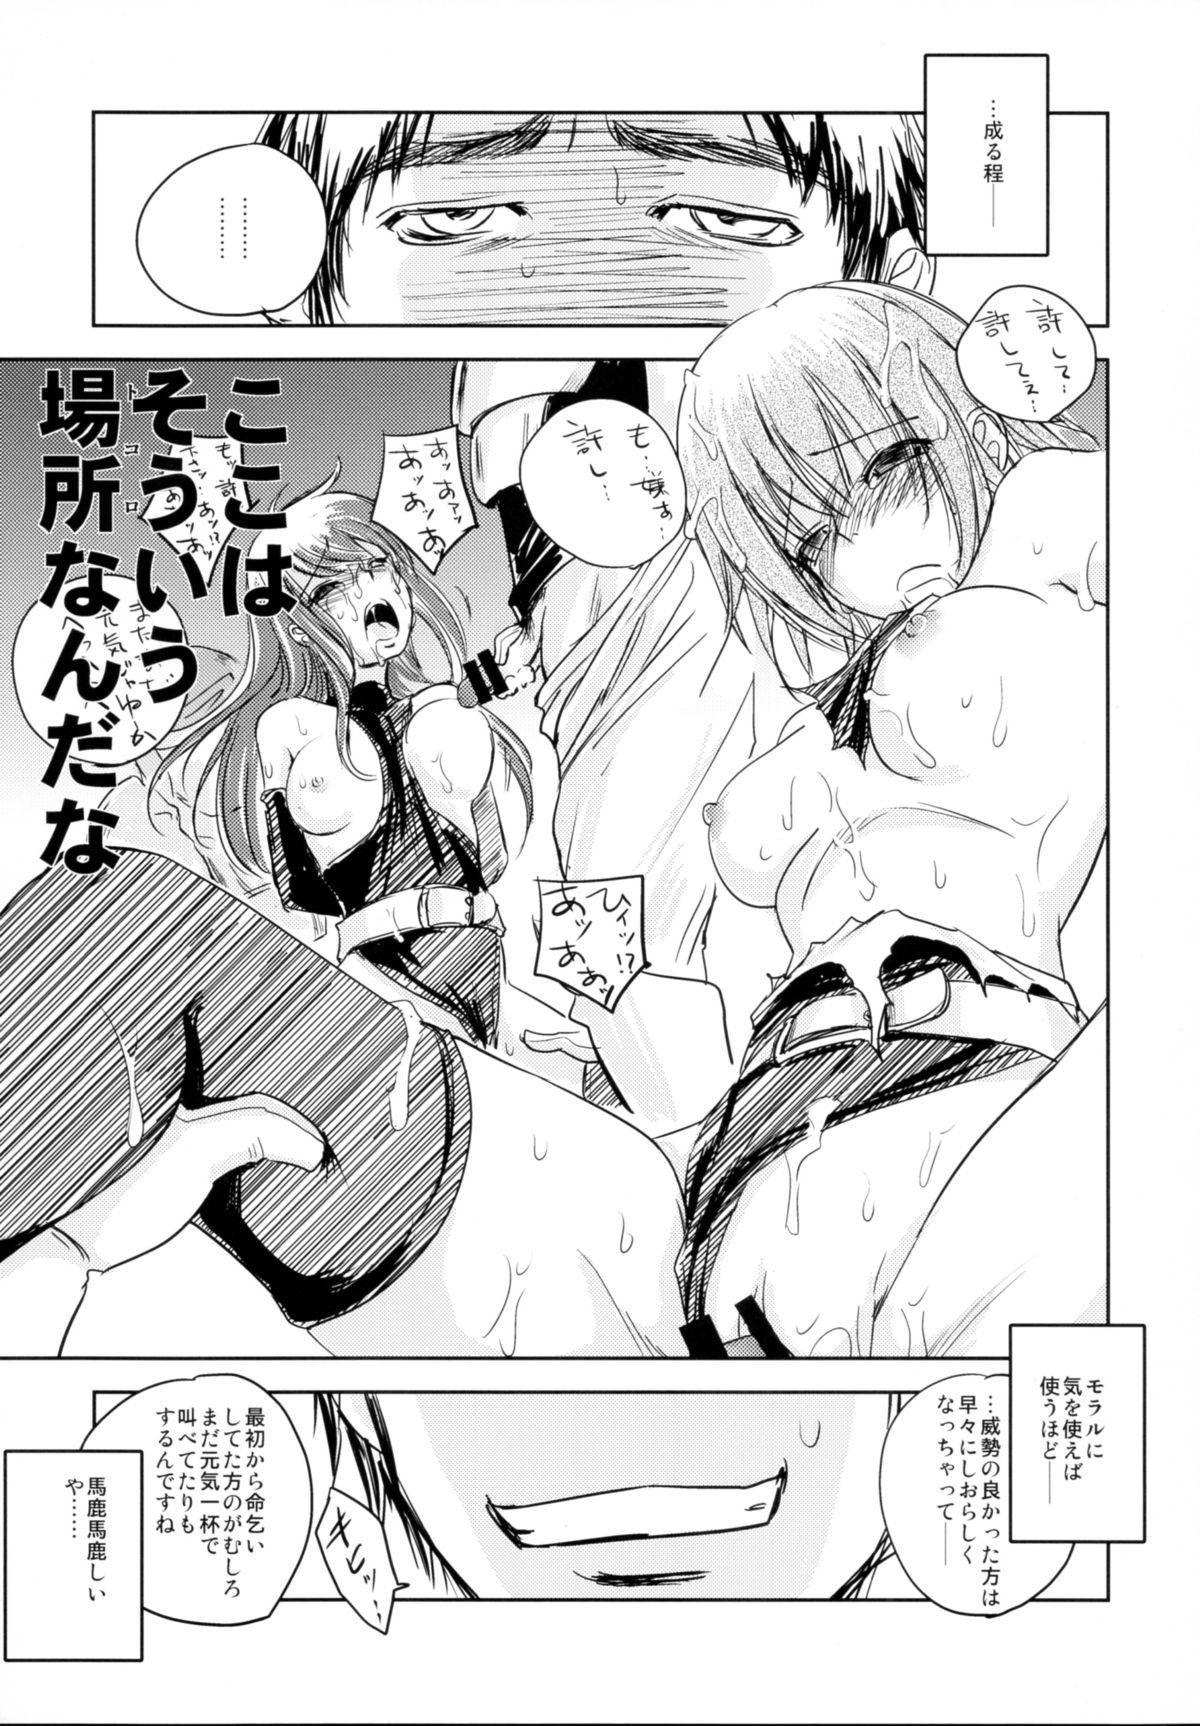 Spreading GRASSEN'S WAR ANOTHER STORY Ex #03 Node Shinkou III Gaydudes - Page 11